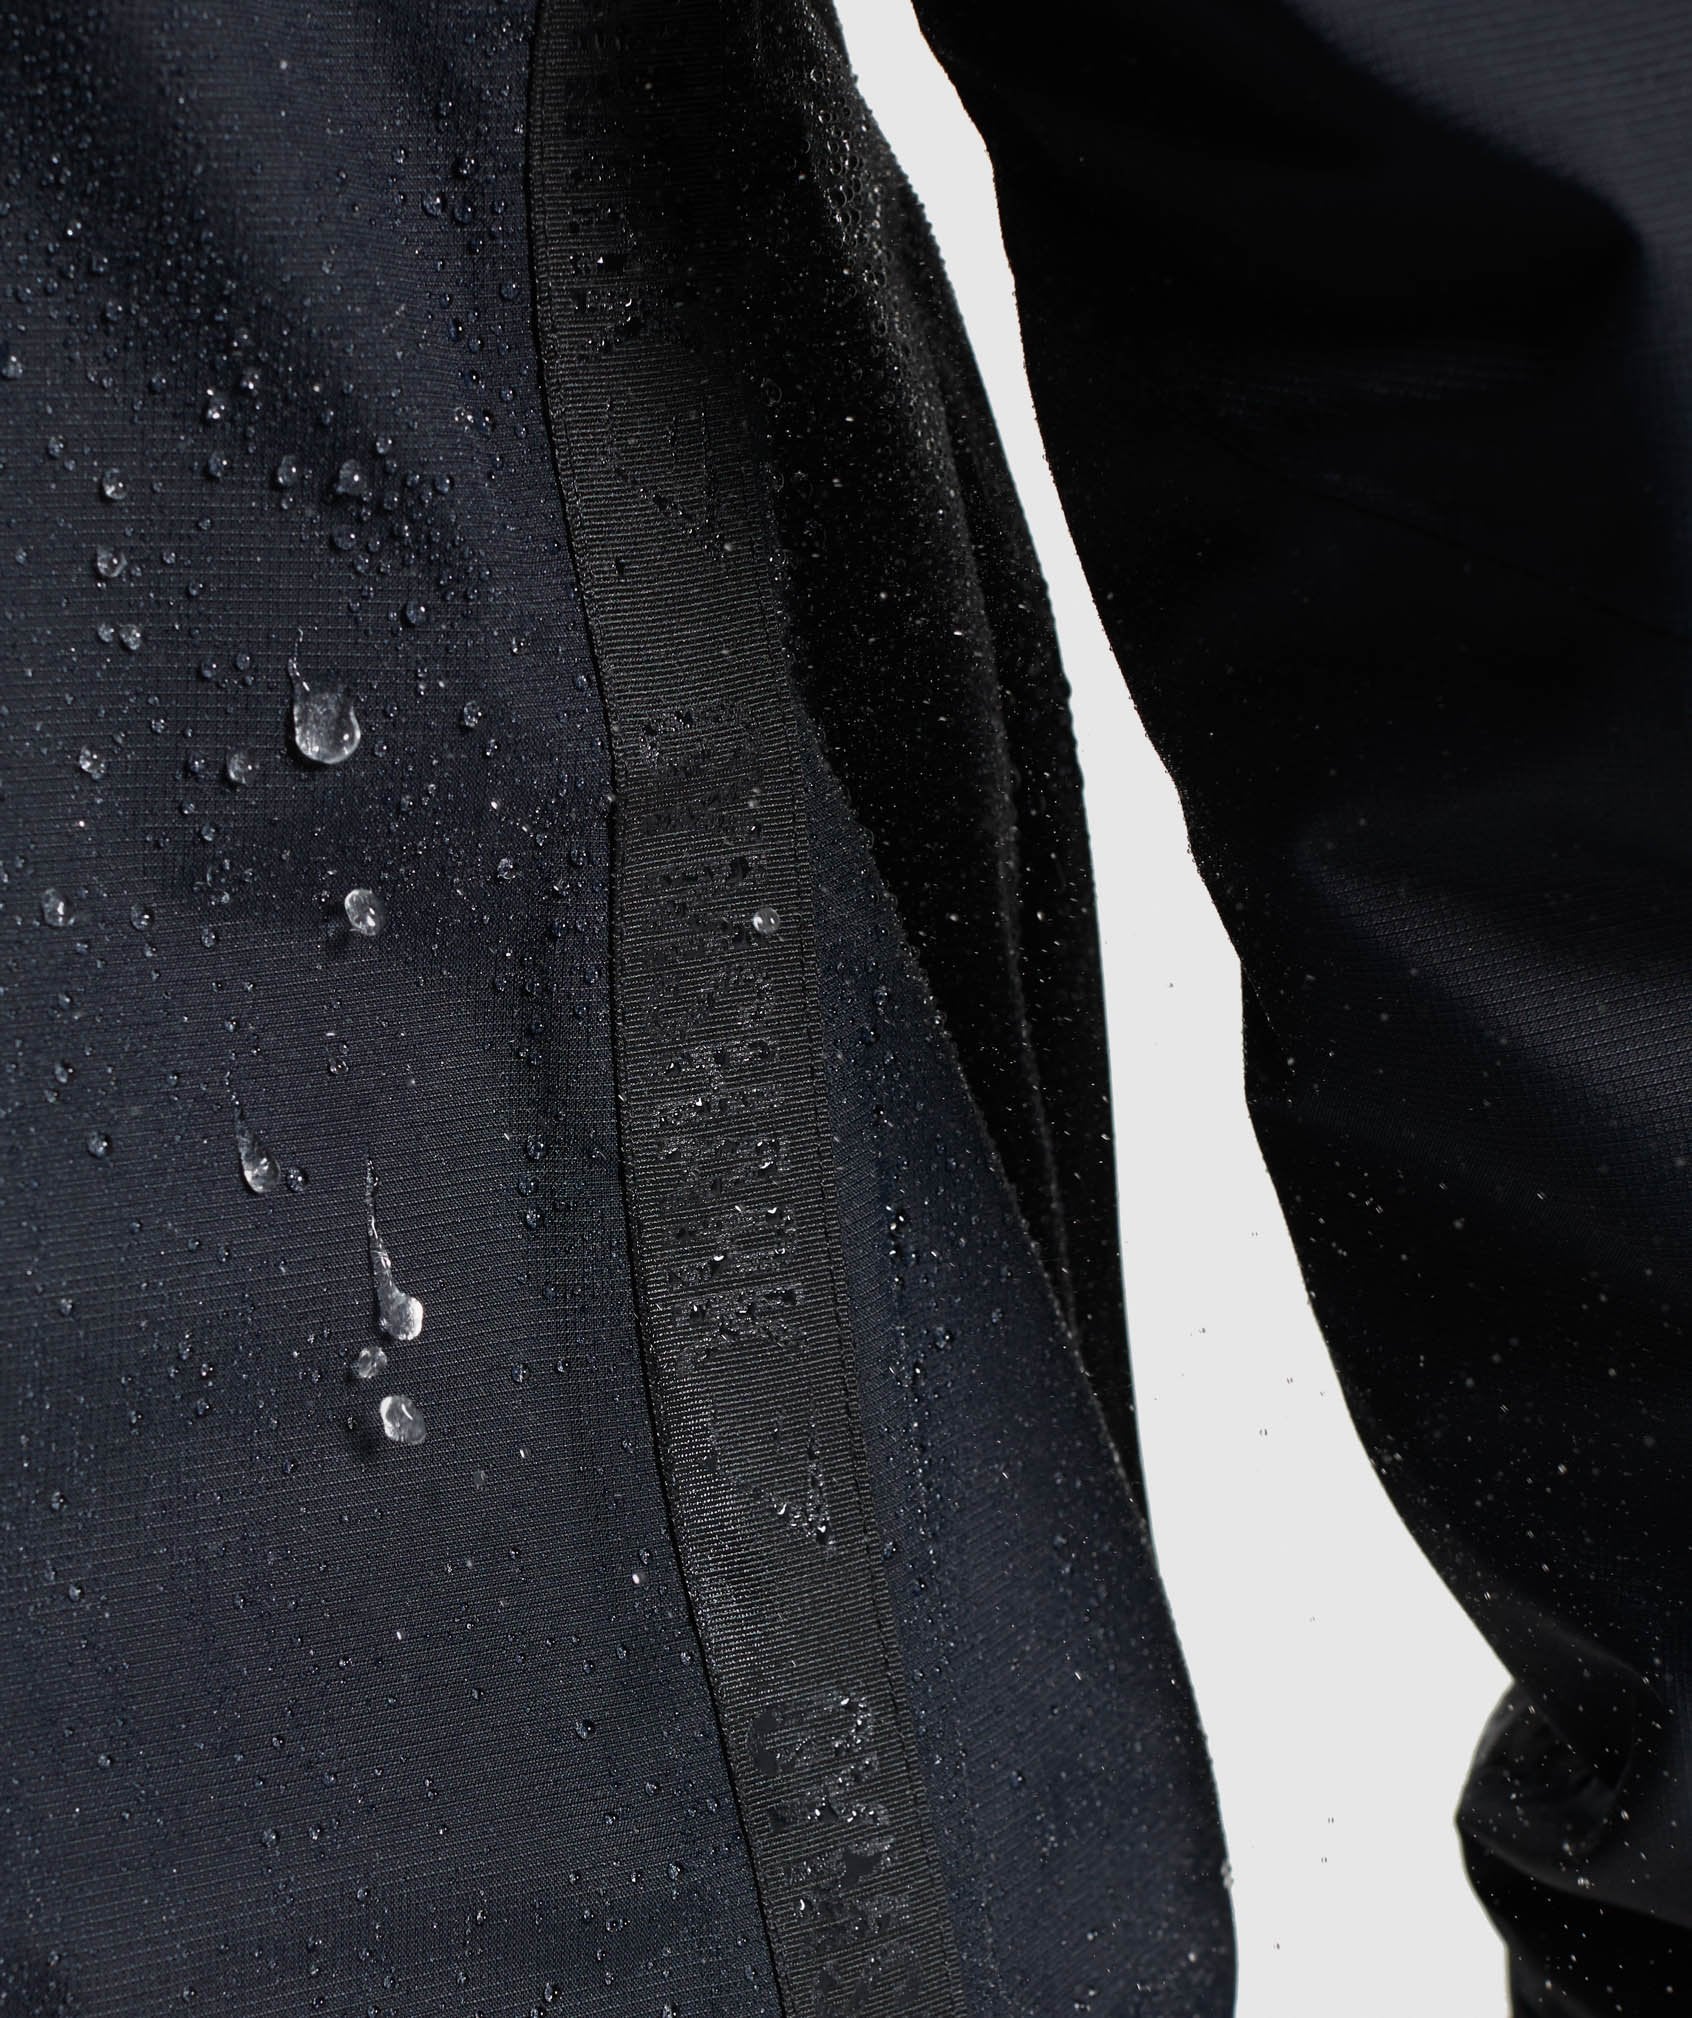 Vortex Waterproof Jacket in Black - view 6